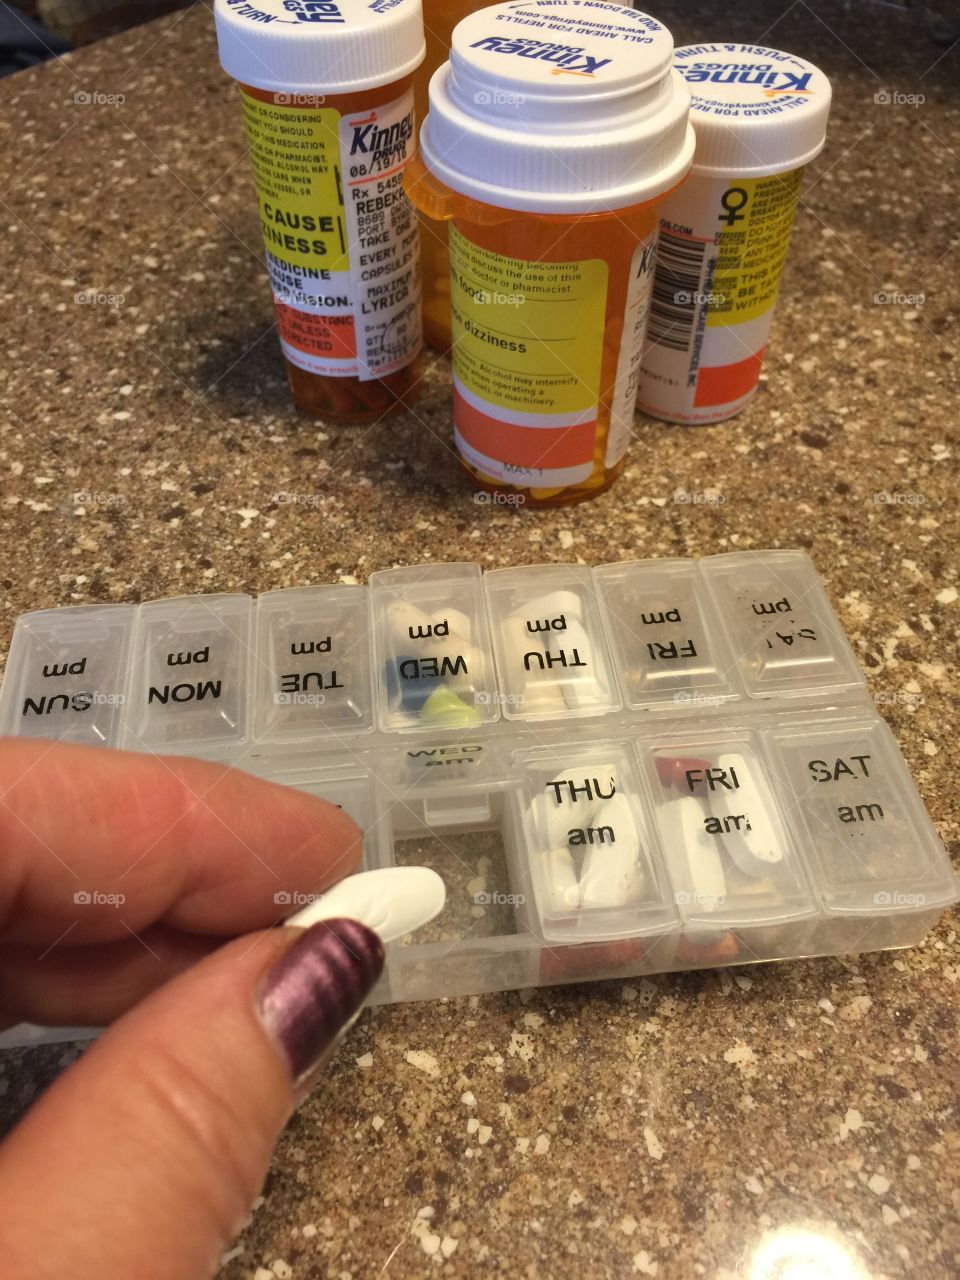 Preparing my husband's medicine for the week